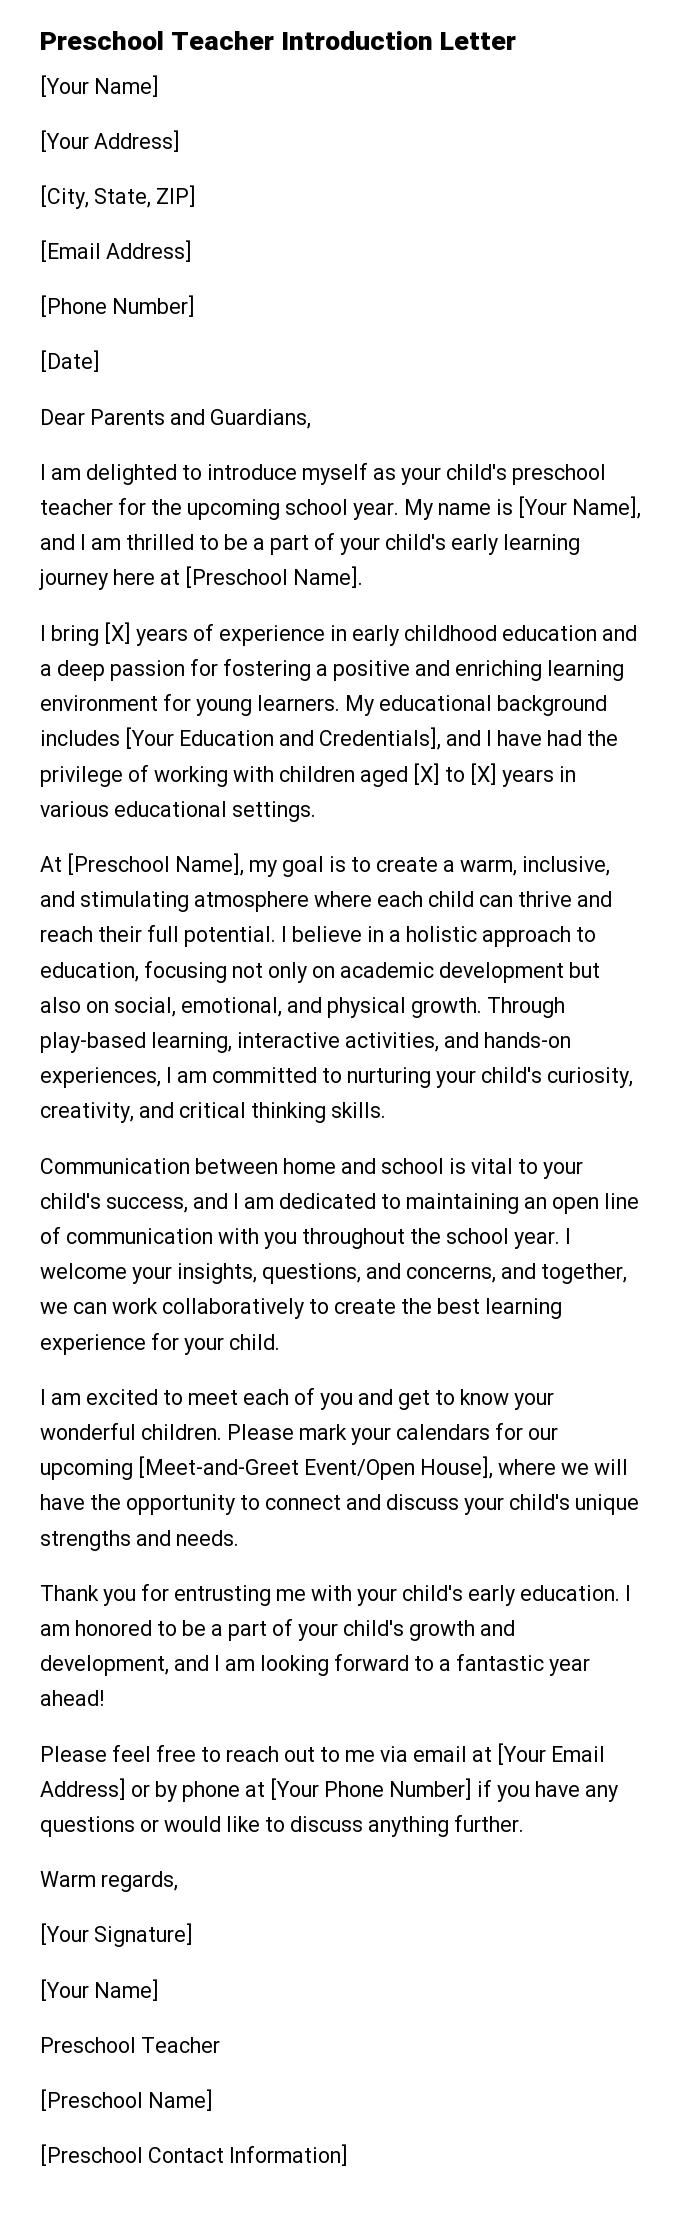 Preschool Teacher Introduction Letter